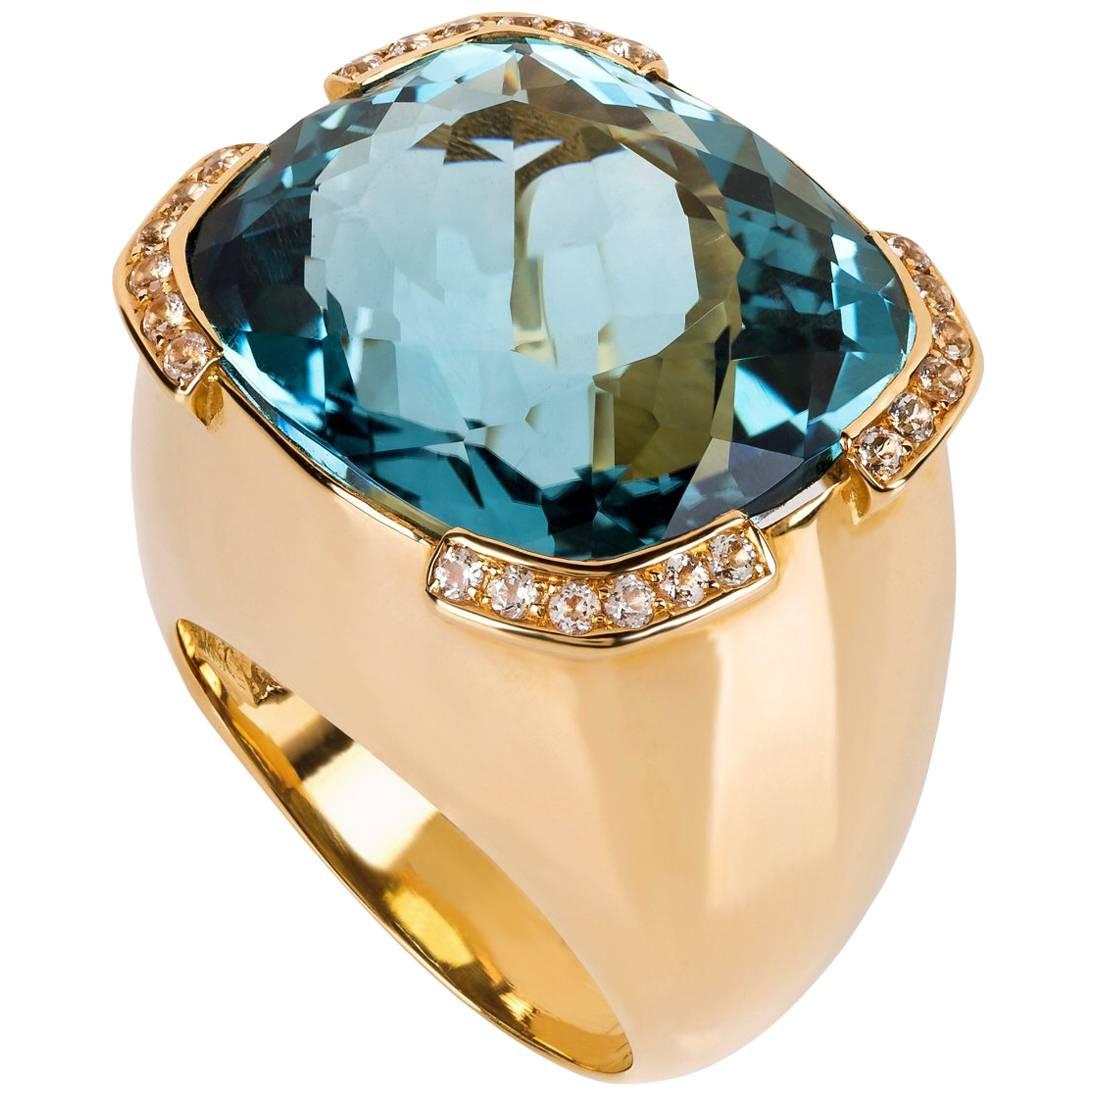  40 Carat Aquamarine Diamond Gold Ring